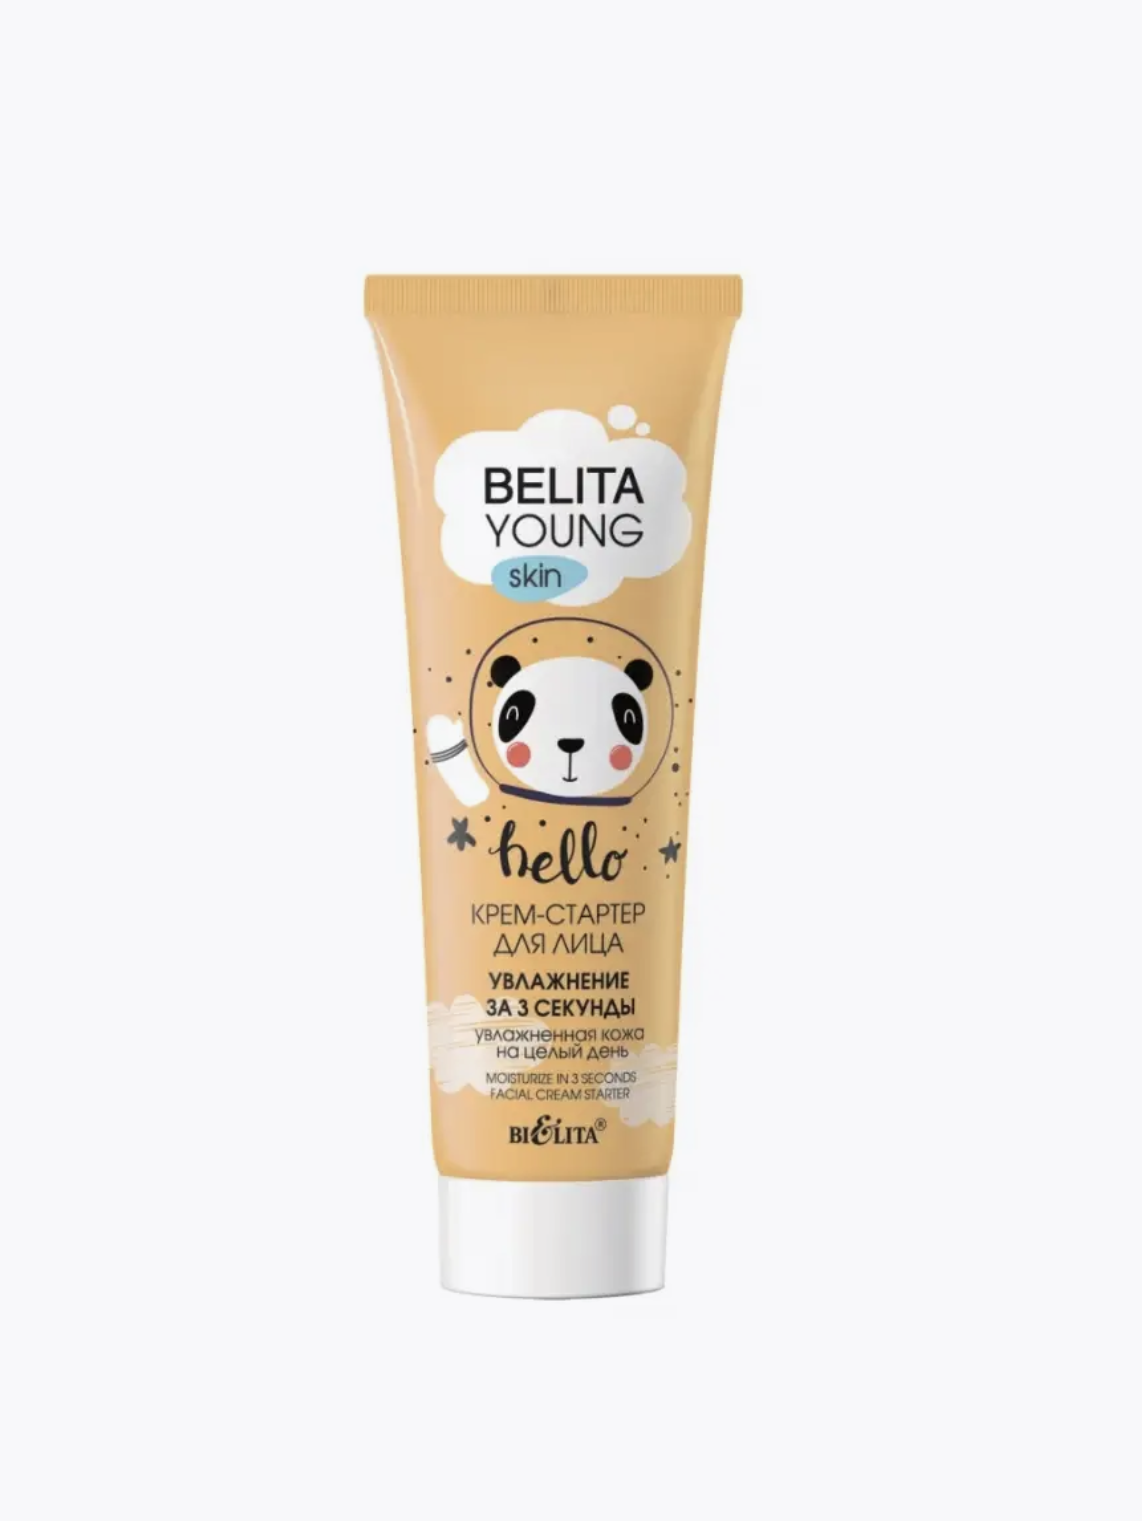   / Belita Young Skin - -   Hello   3  50 